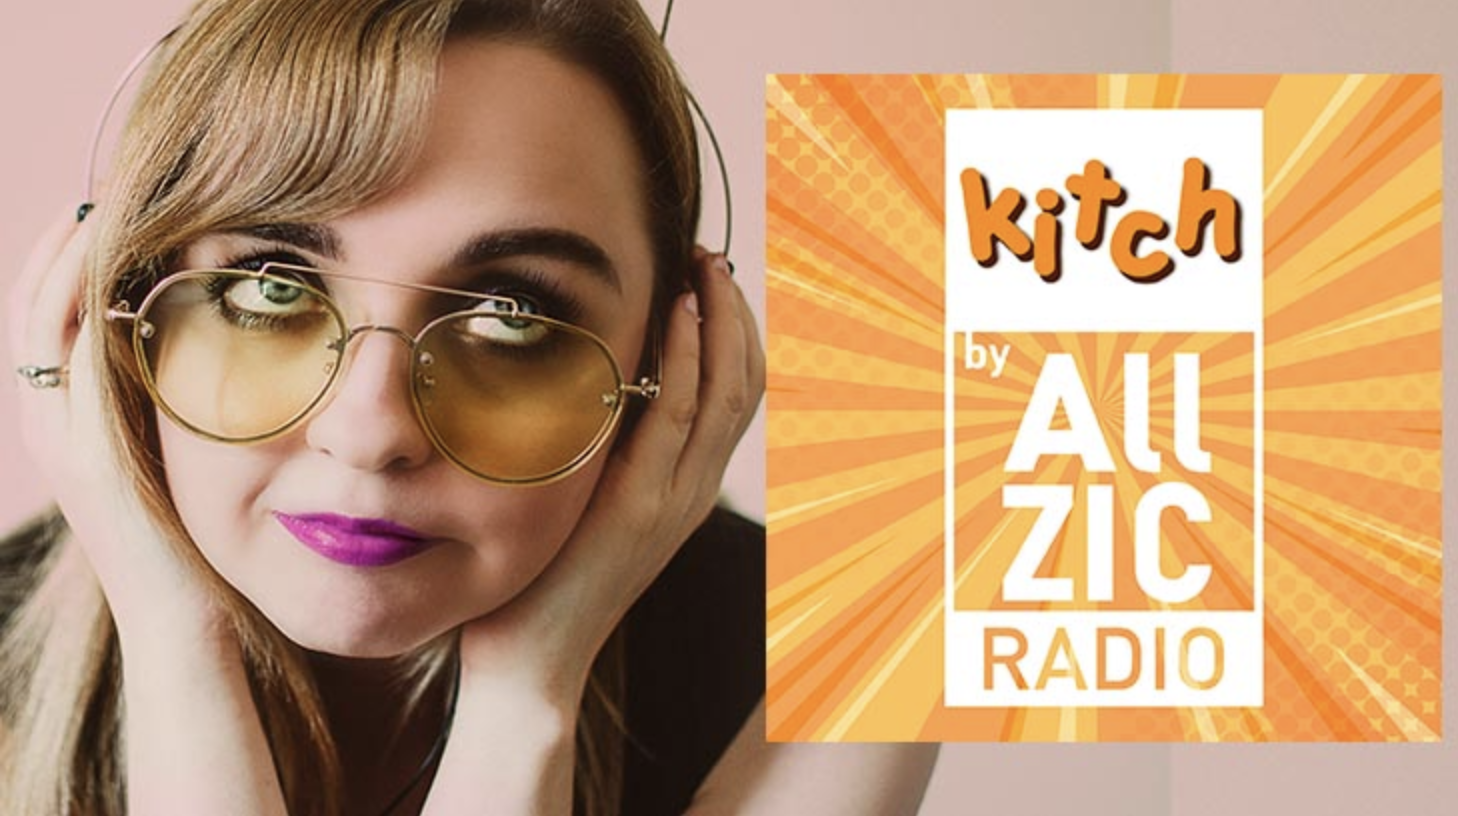 Allzic Radio KITCH comes now!